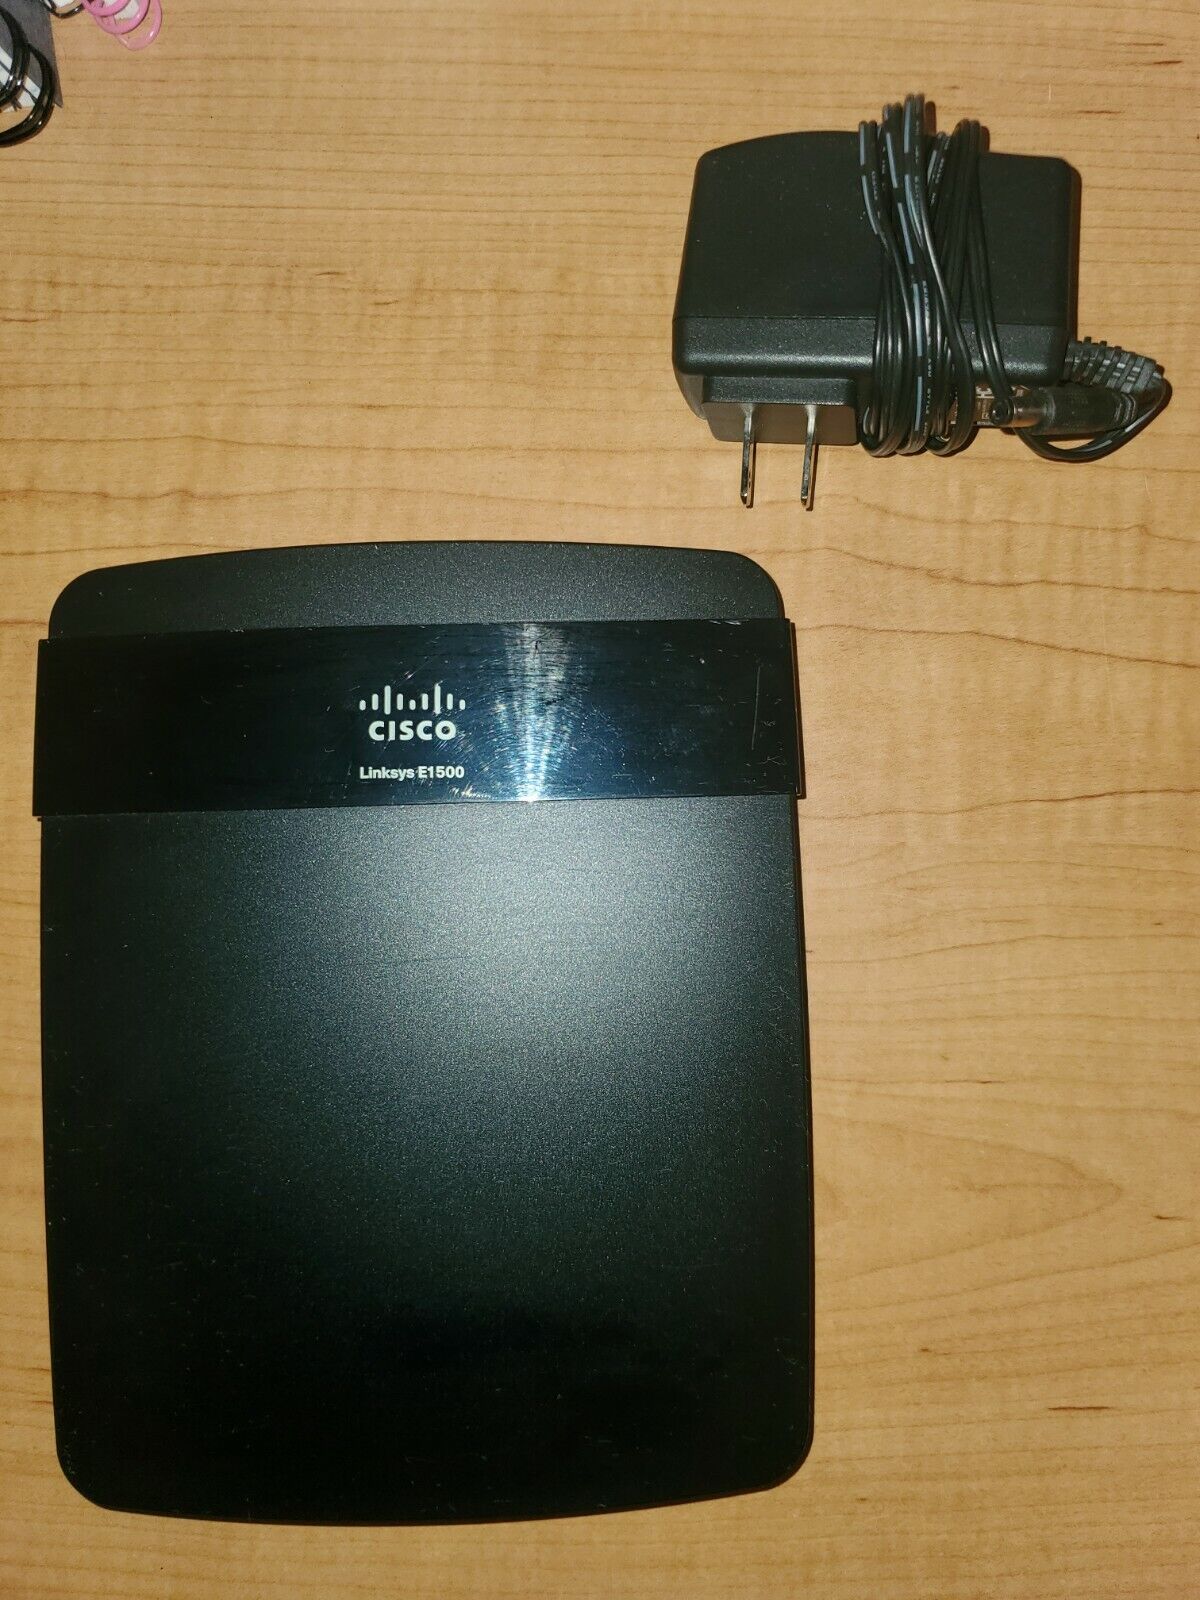 Cisco Linksys E1500 4-Port Wireless-N Router w/ power cord 